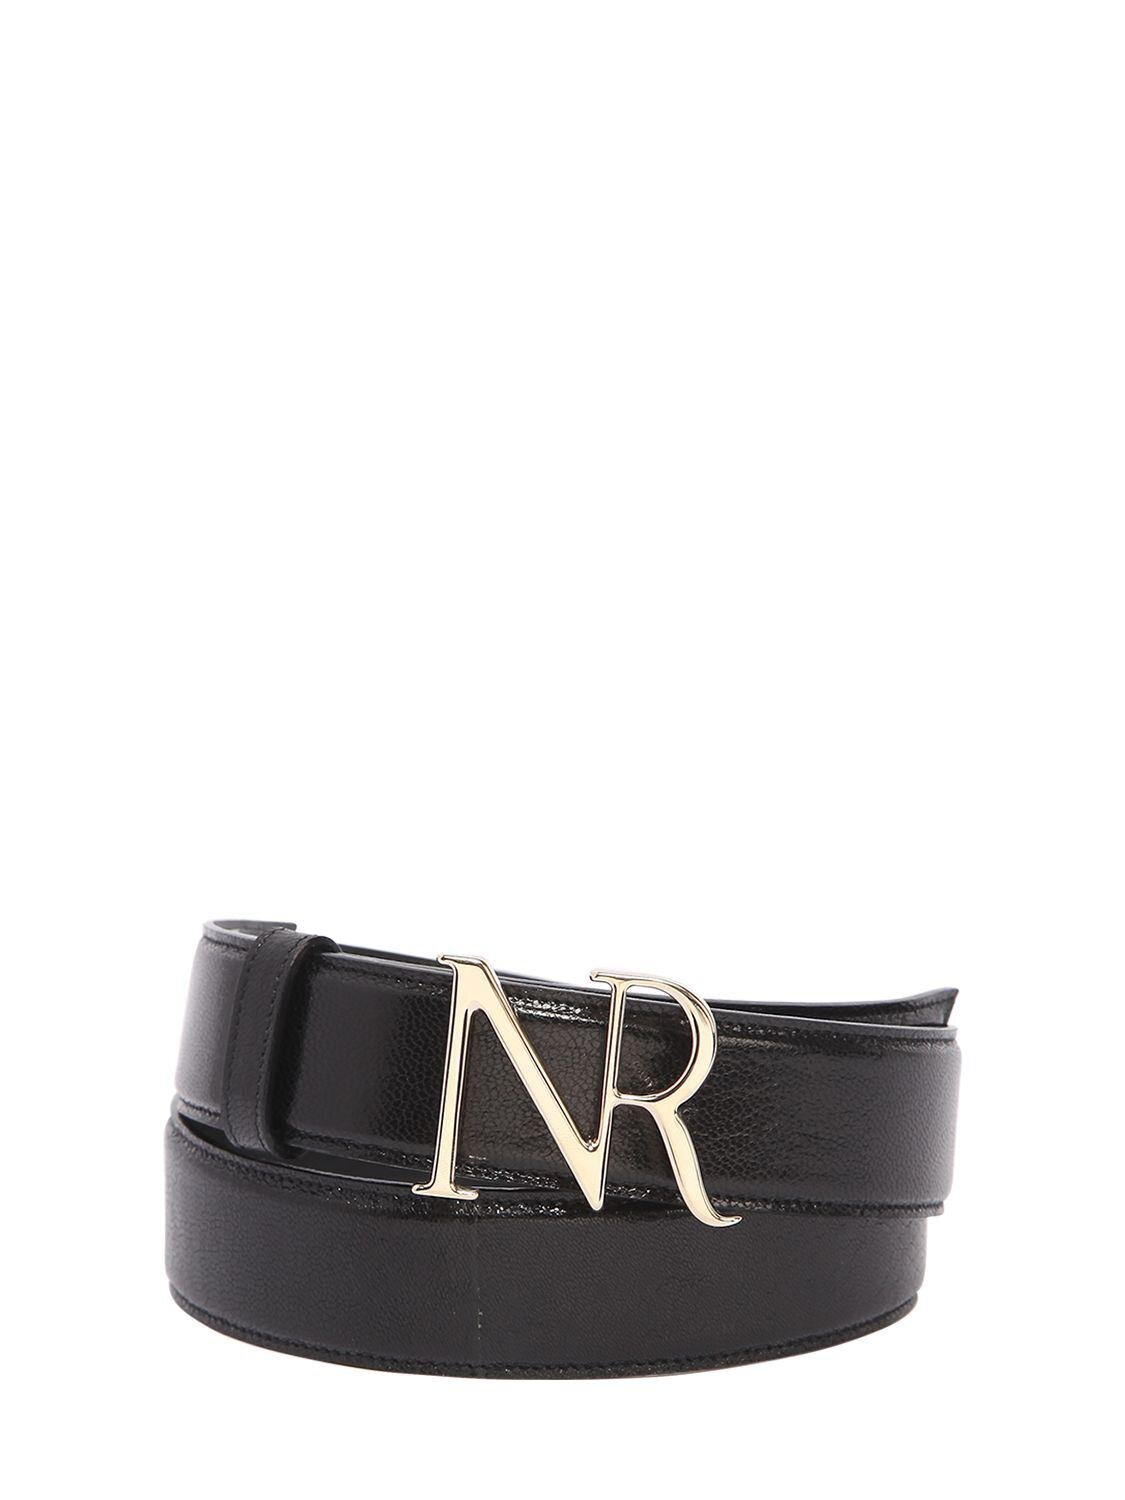 Nina Ricci NR Logo Belt in Black — UFO No More